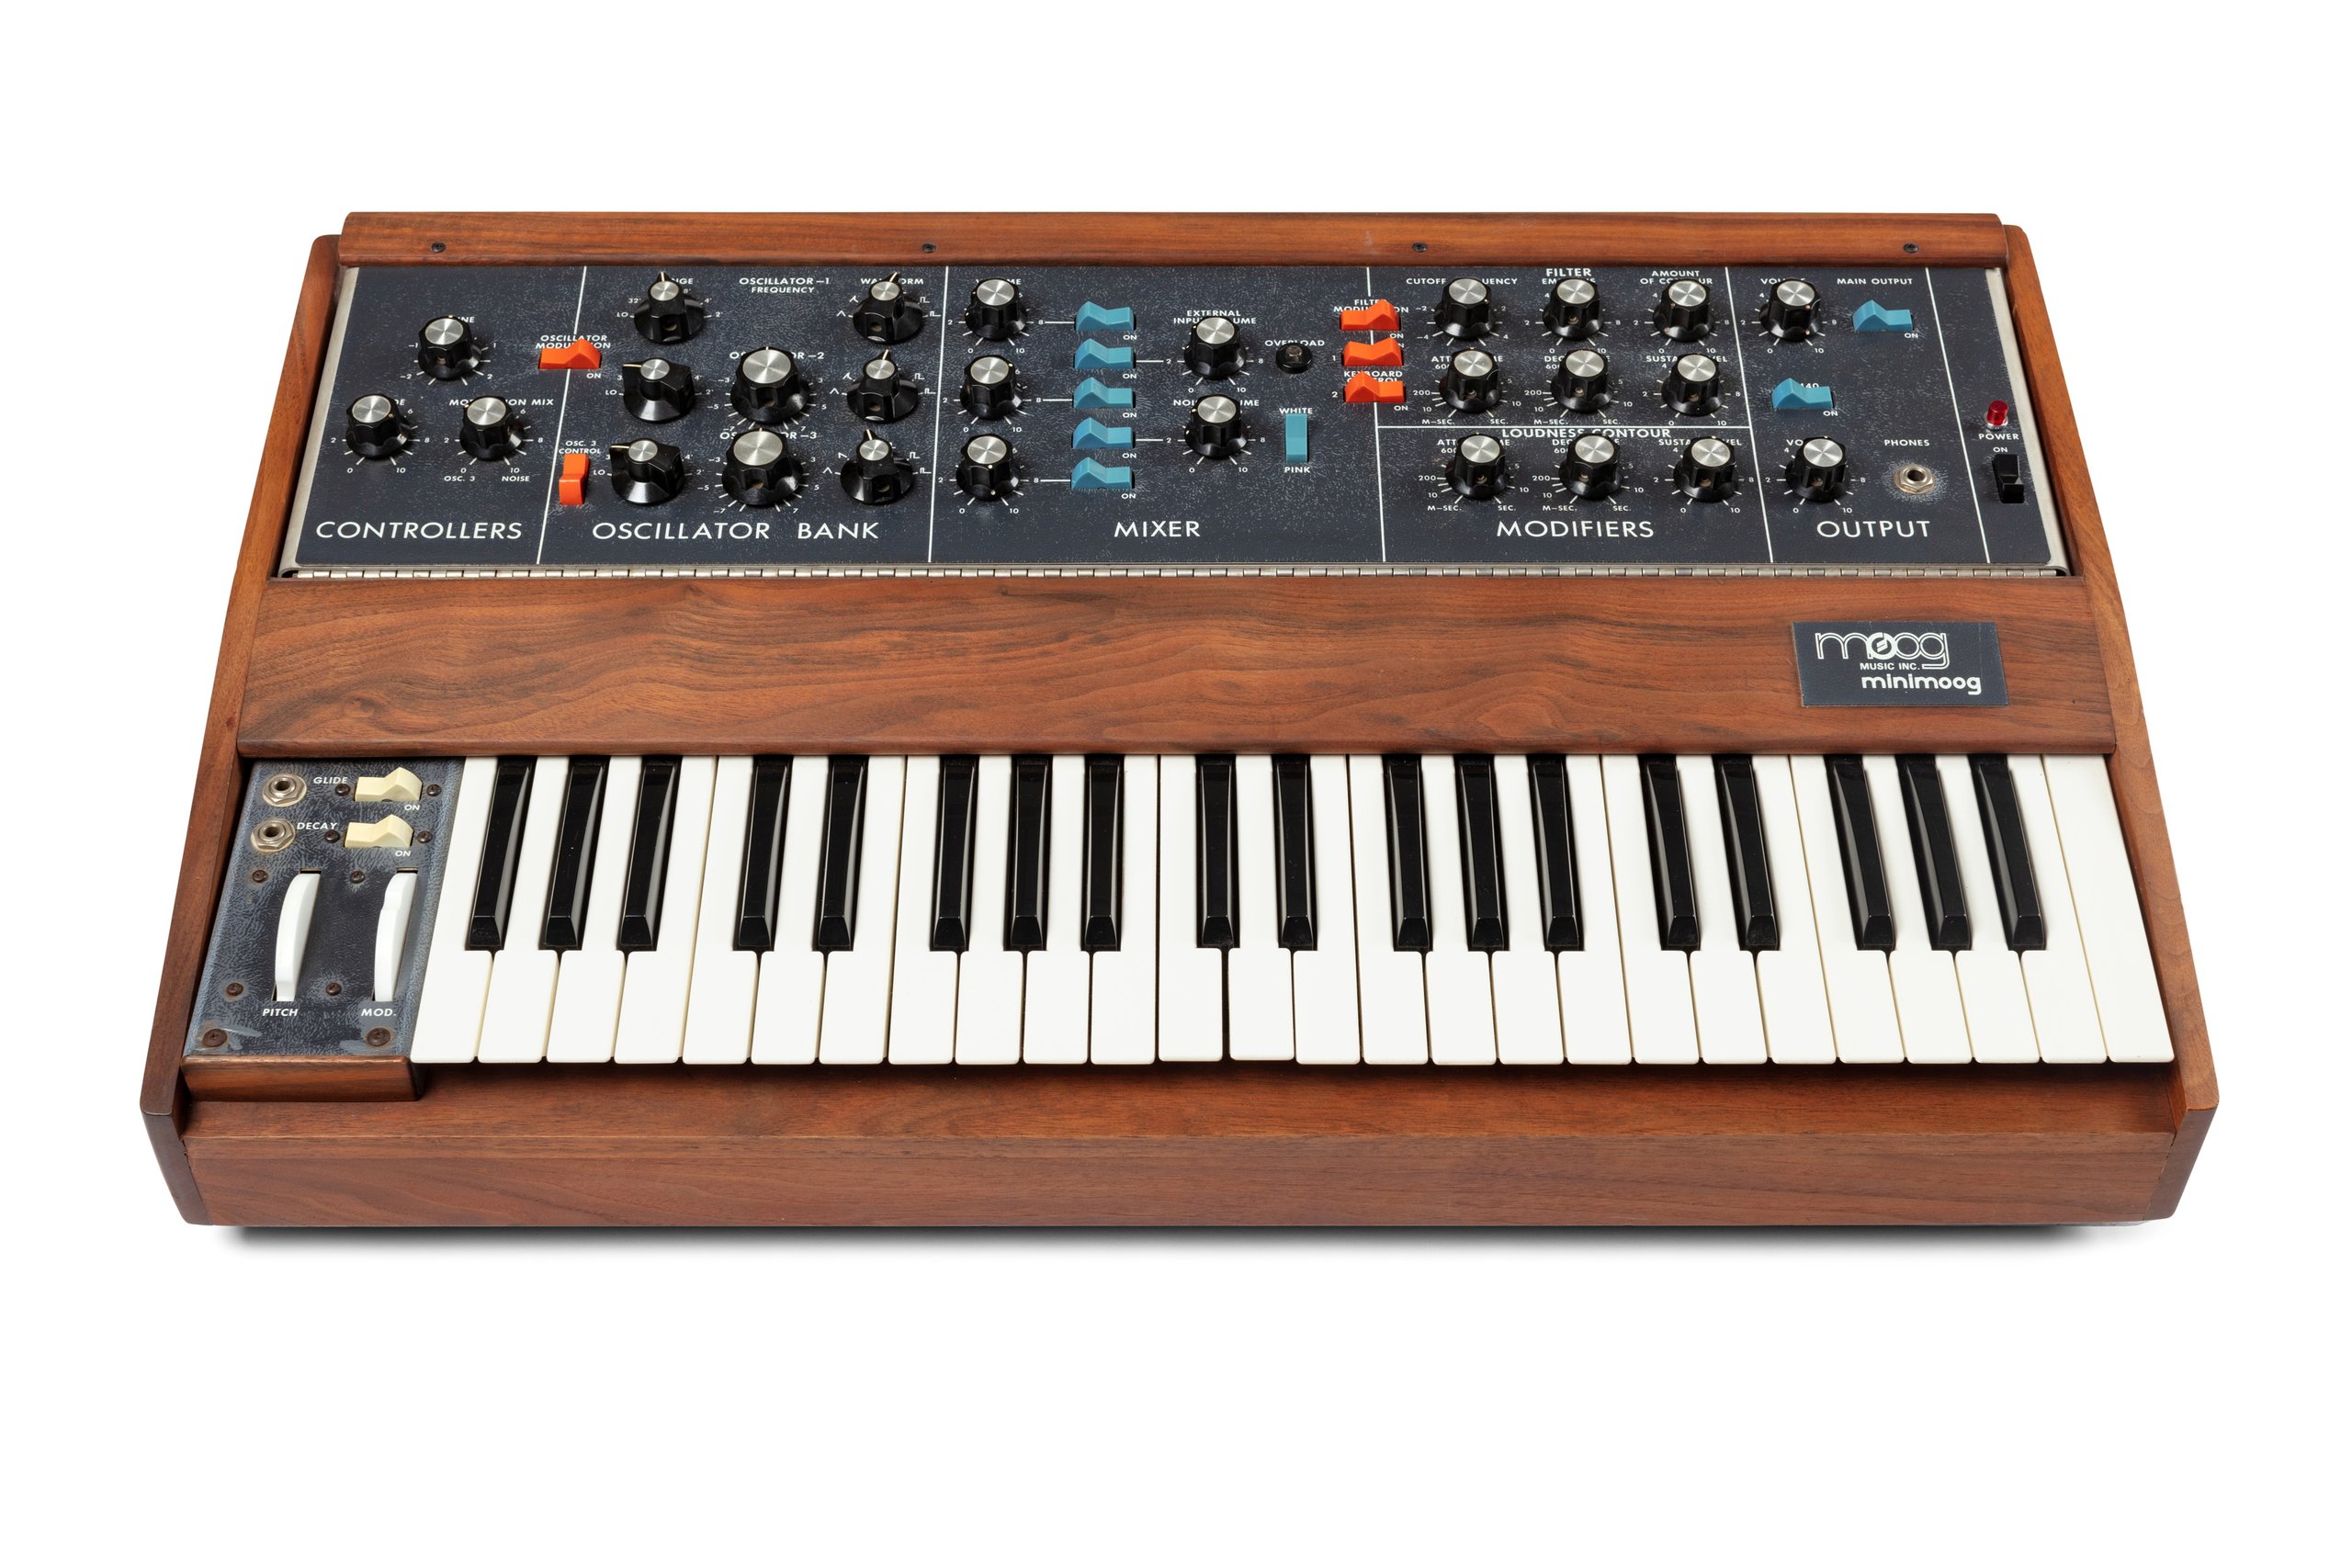 'Minimoog model D' synthesizer by Moog Music Inc